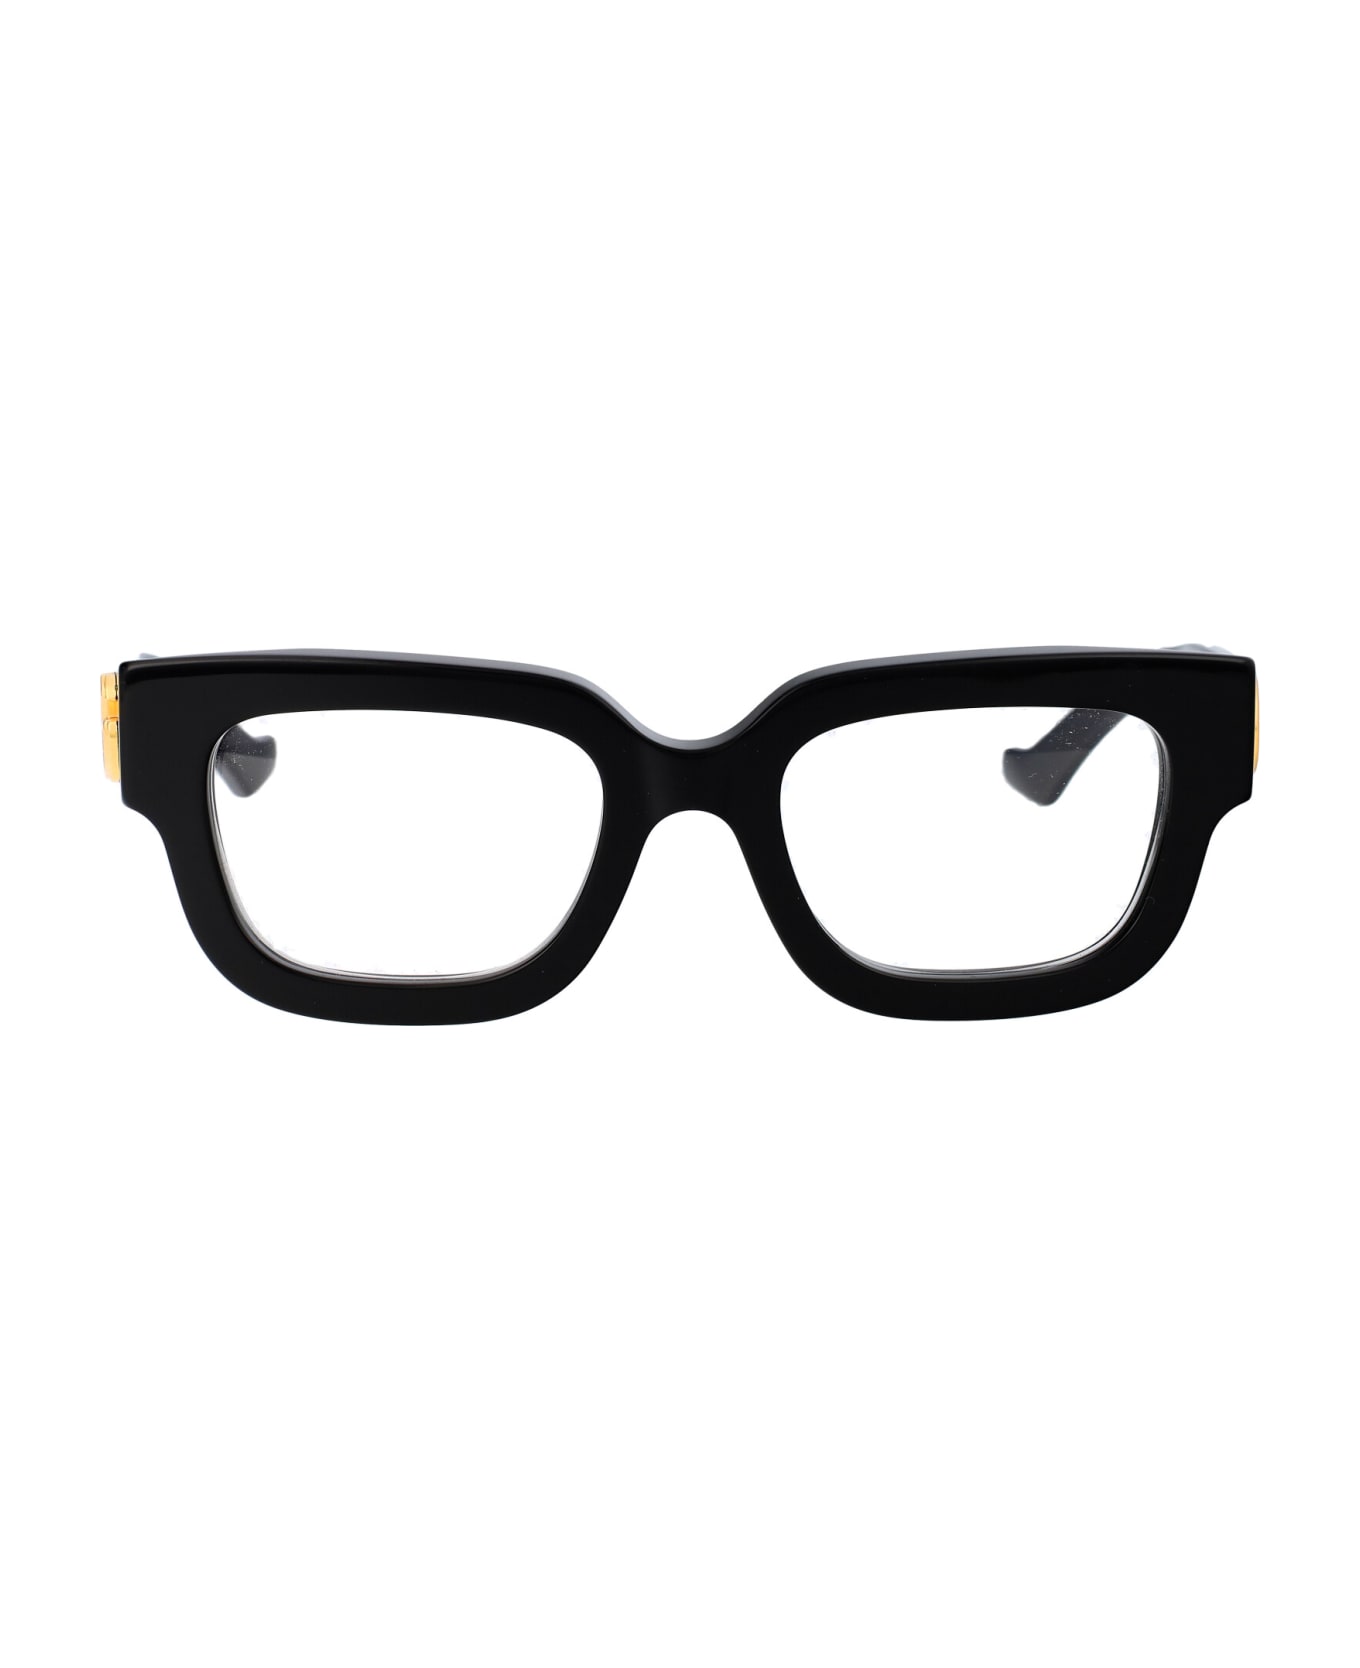 Gucci Eyewear Gg1548o Glasses - 001 BLACK BLACK TRANSPARENT